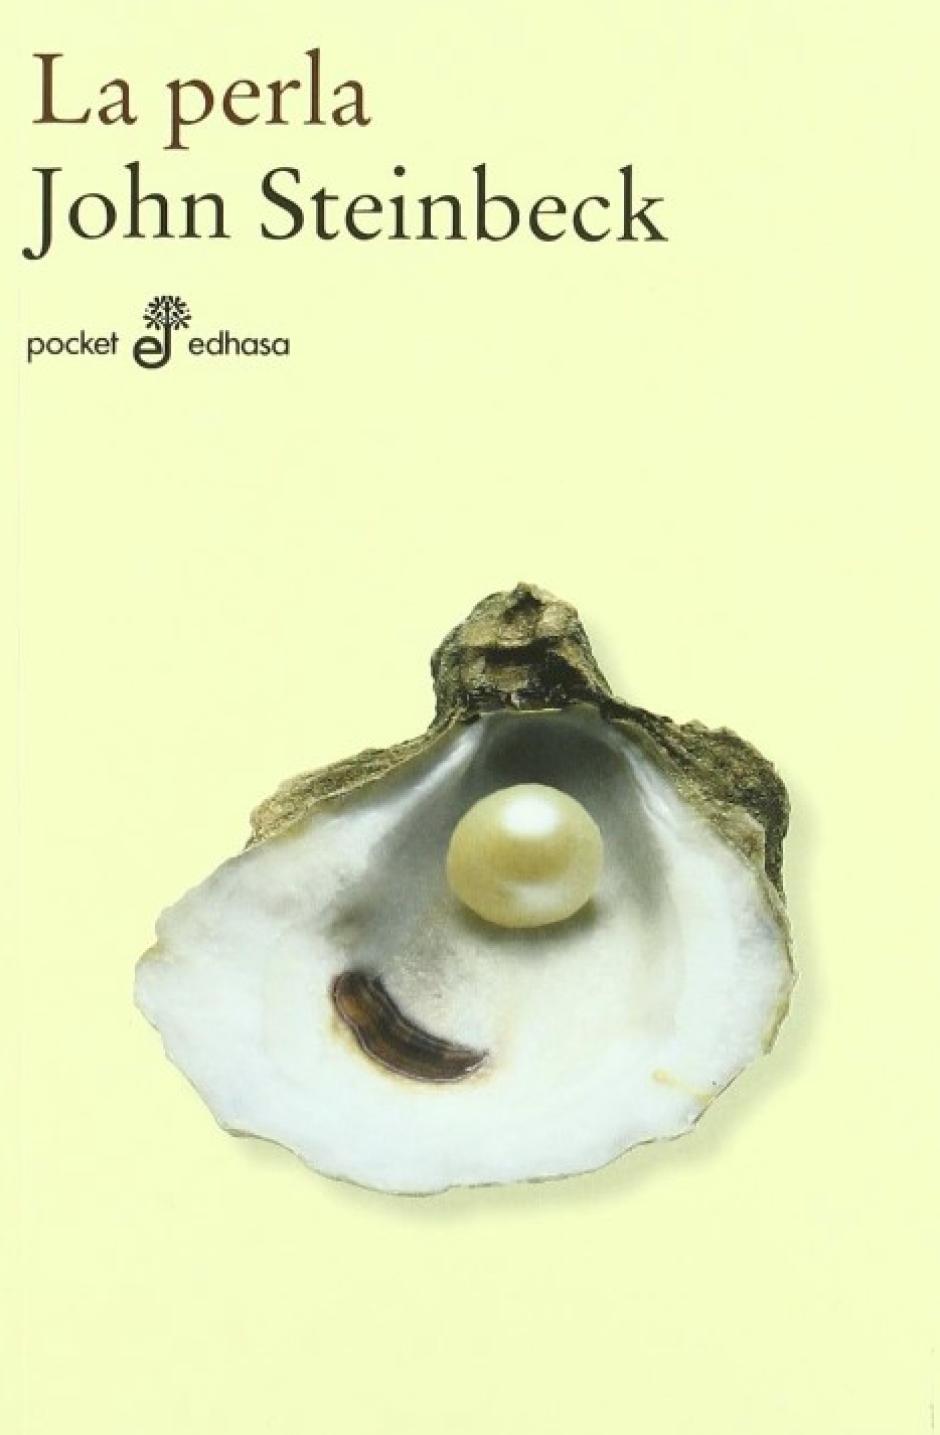 La perla (1947) de John Steinbeck